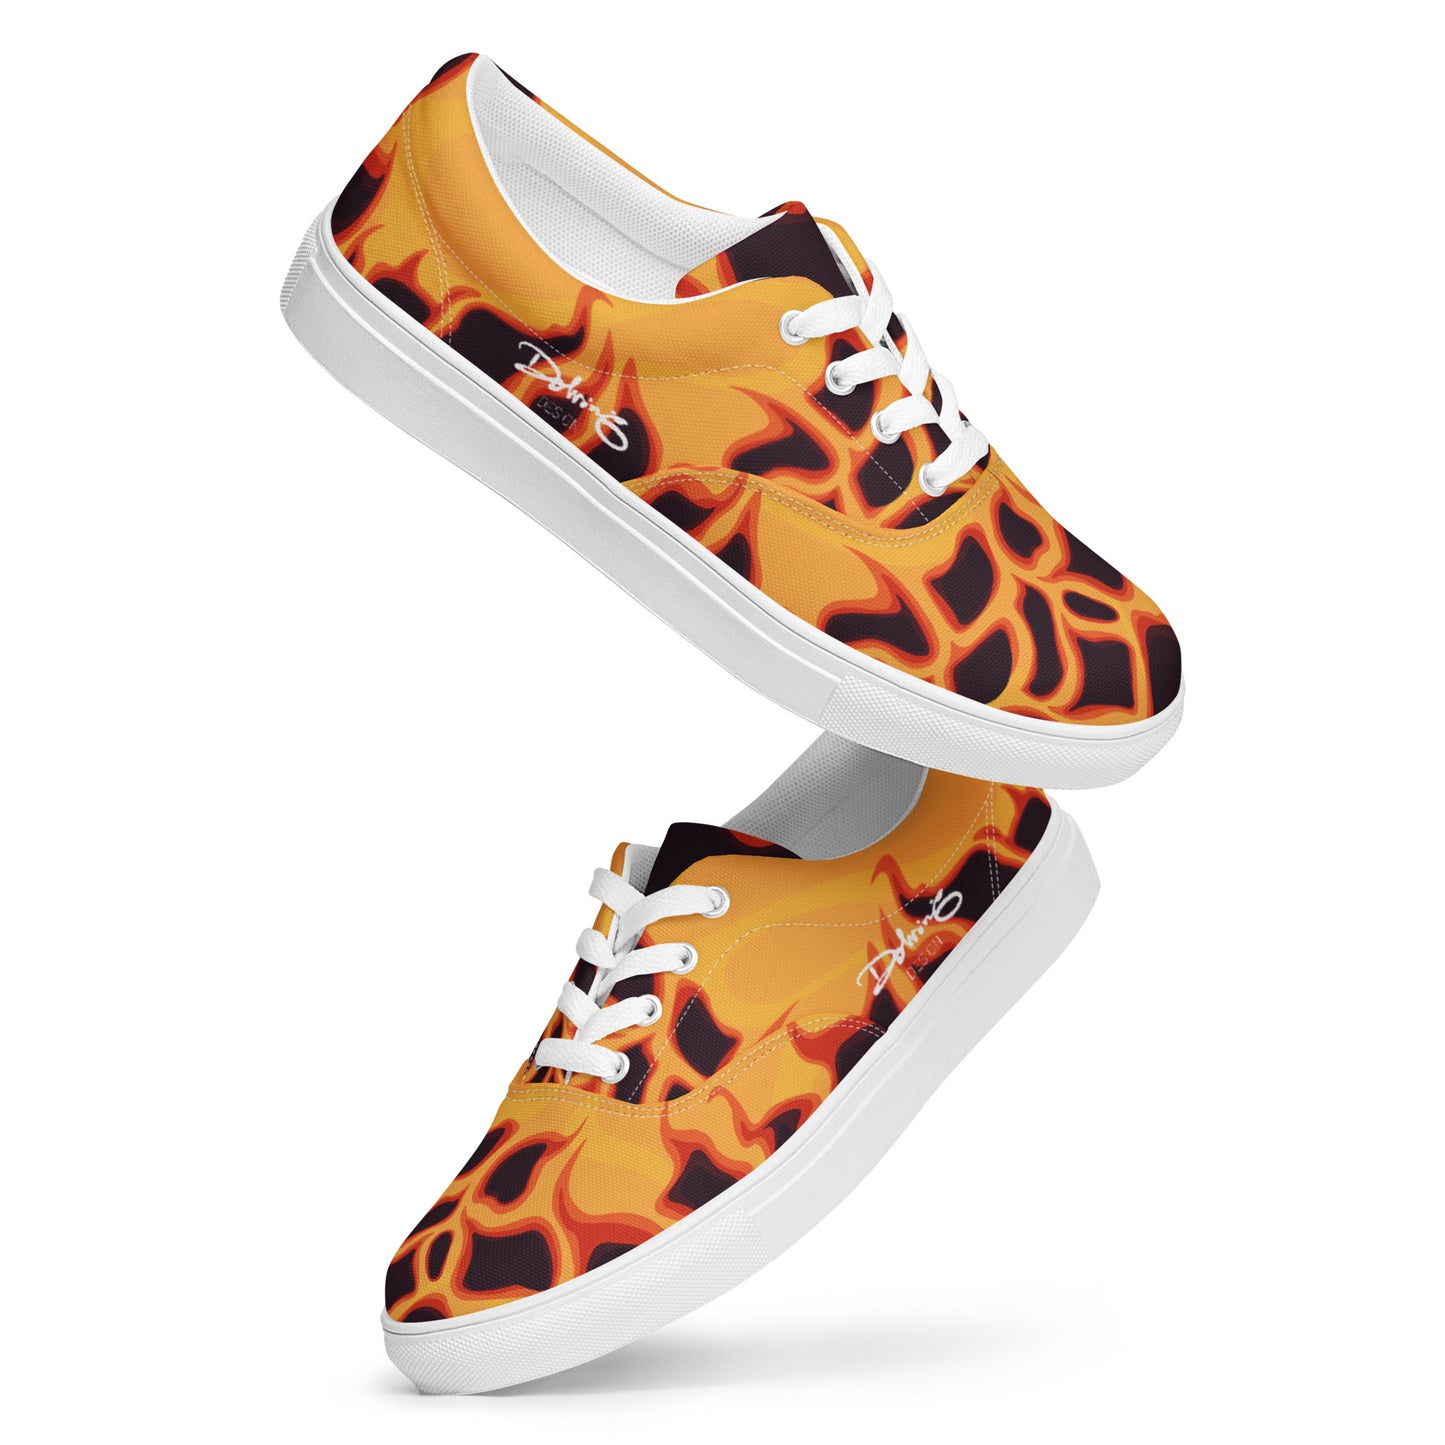 FIRE FIRE by DOLVING - Men’s lace-up canvas shoes